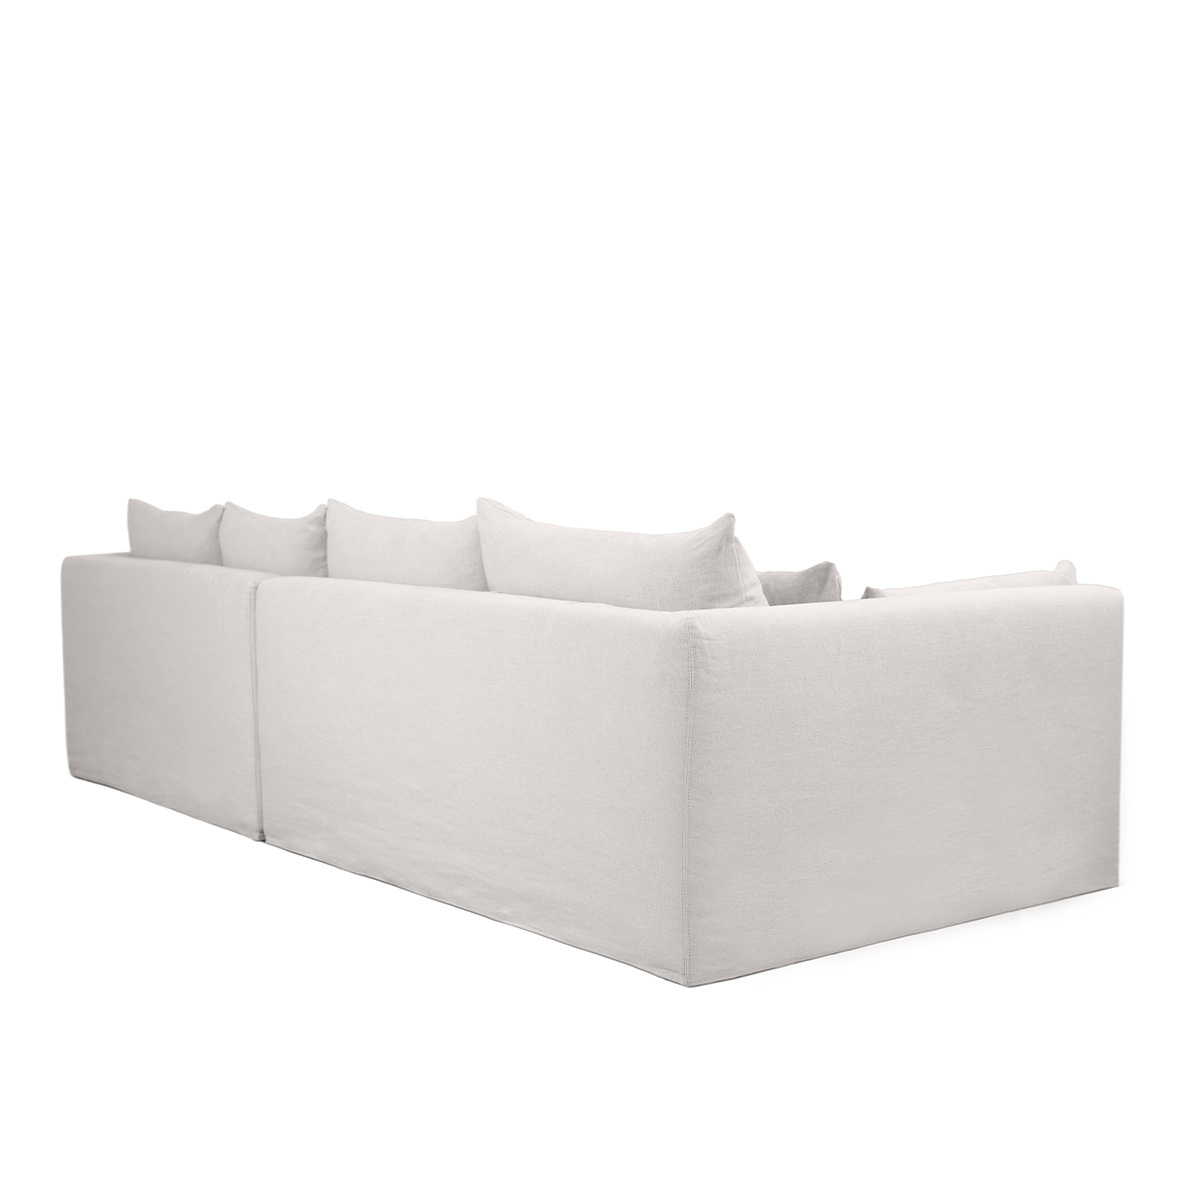 SuperBox corner sofa - Right angle, Various Sizes - Linen - image 4